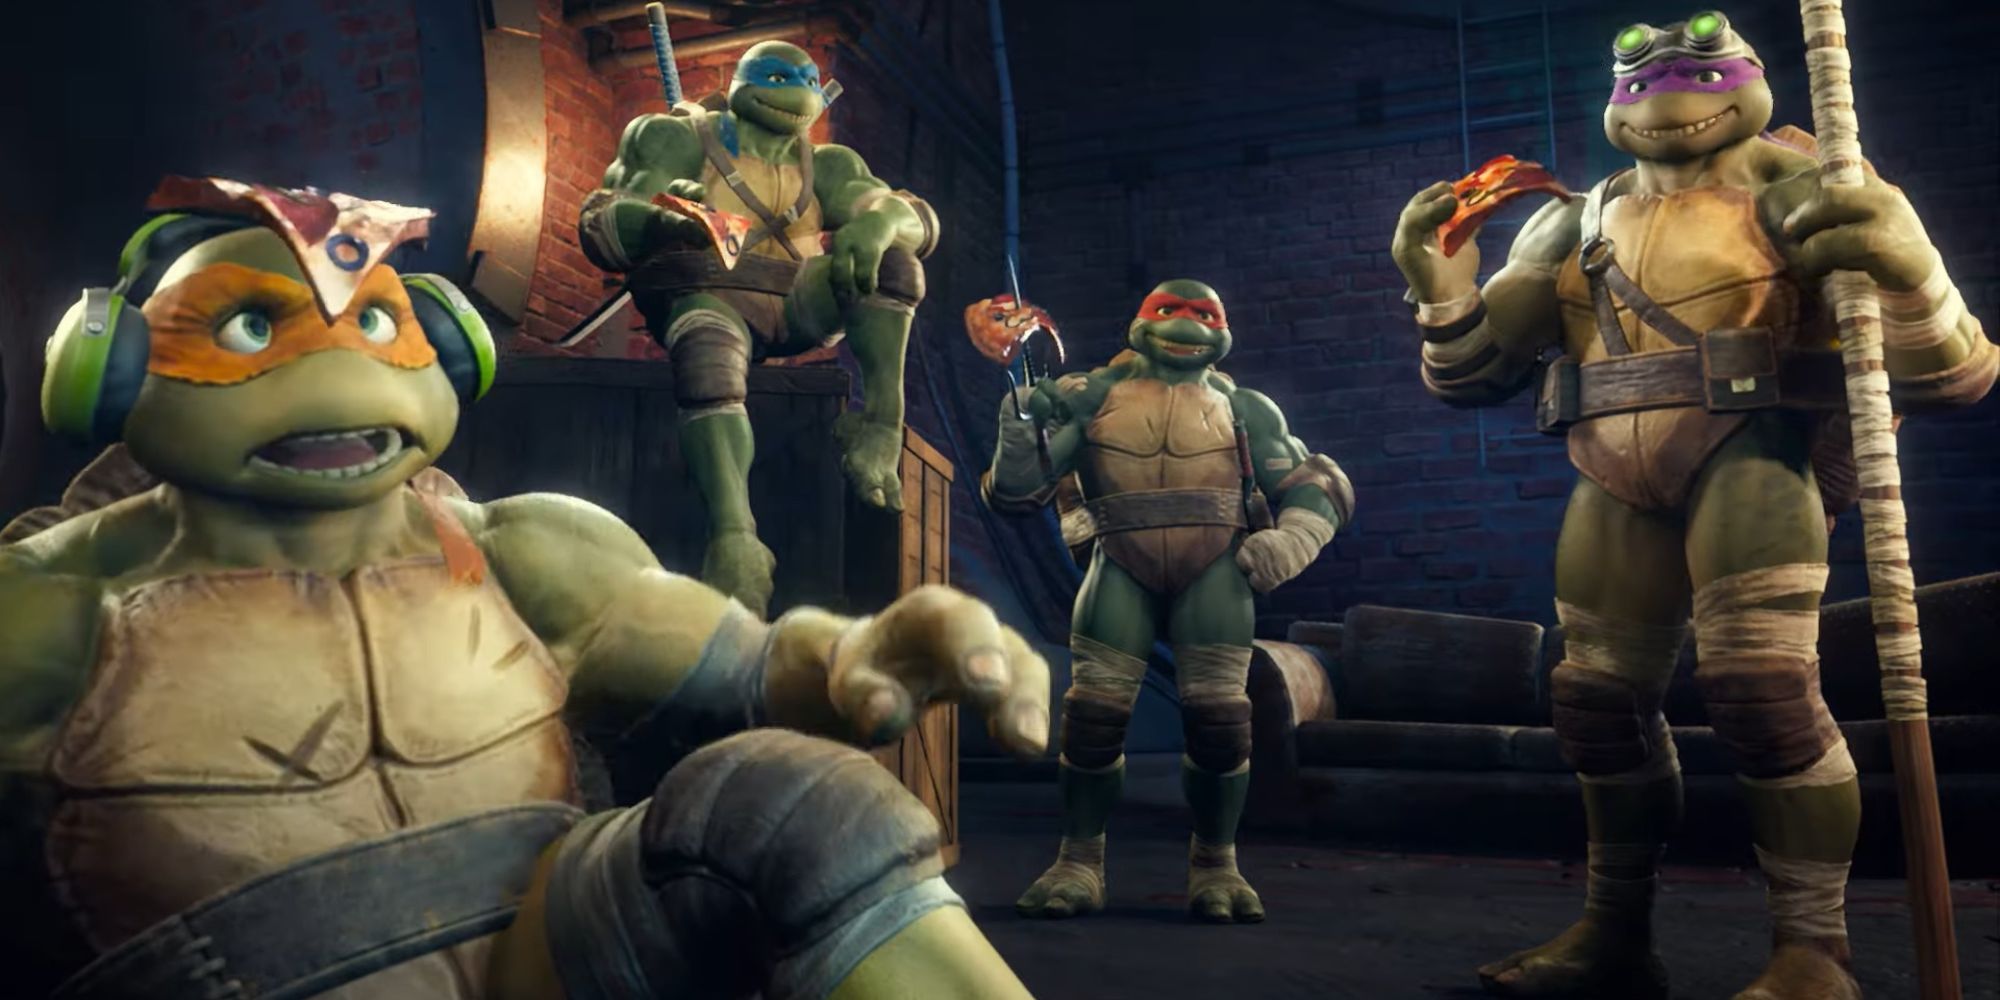 The Teenage Mutant Ninja Turtles eat pizza in the sewers